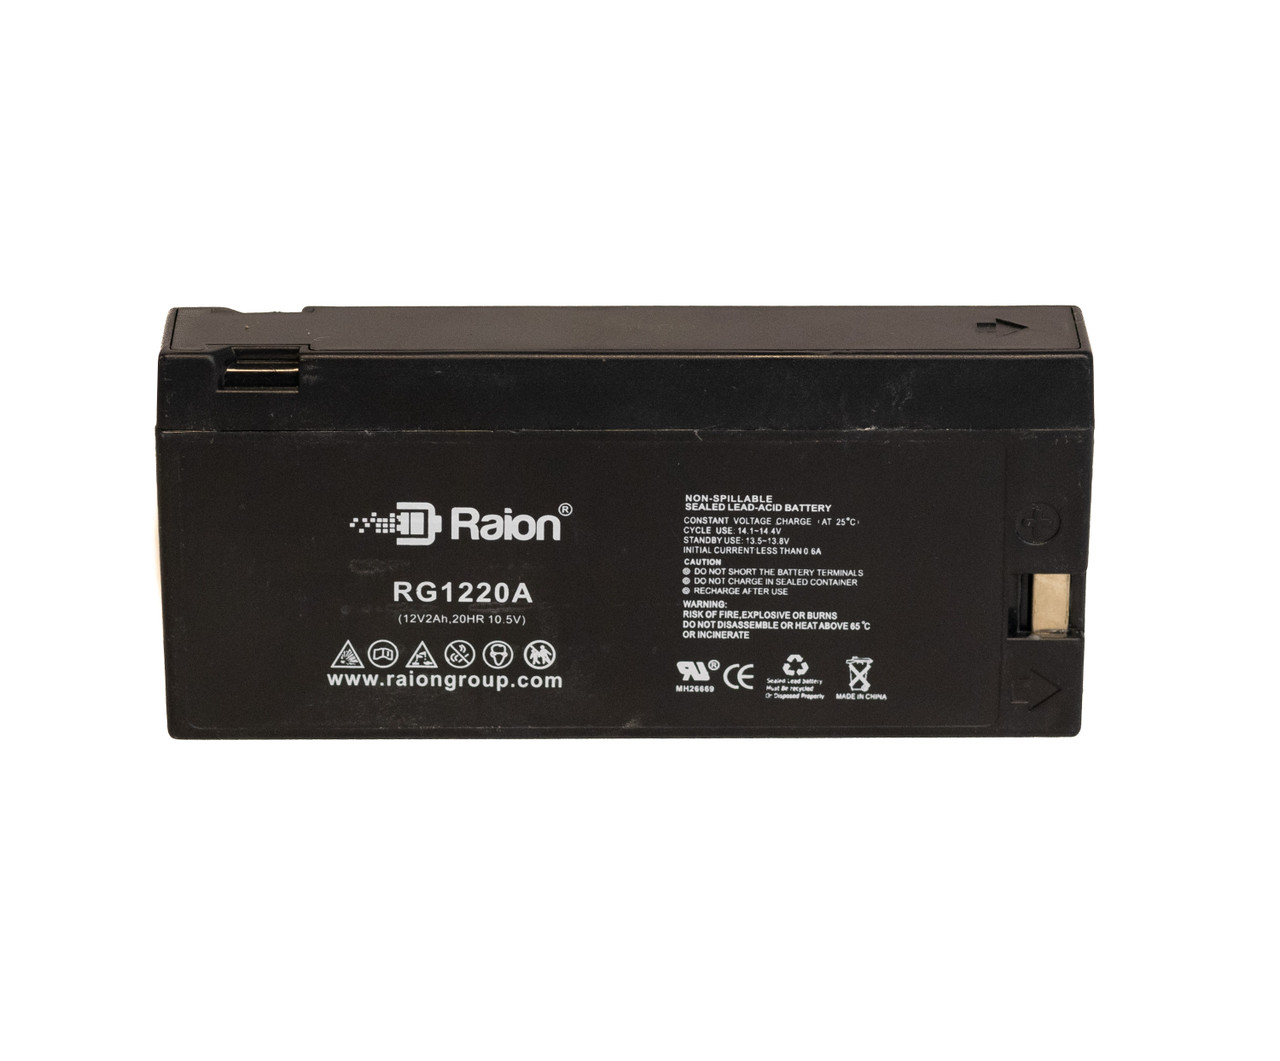 Raion Power RG1220A SLA Battery for JC Penney 686-6023